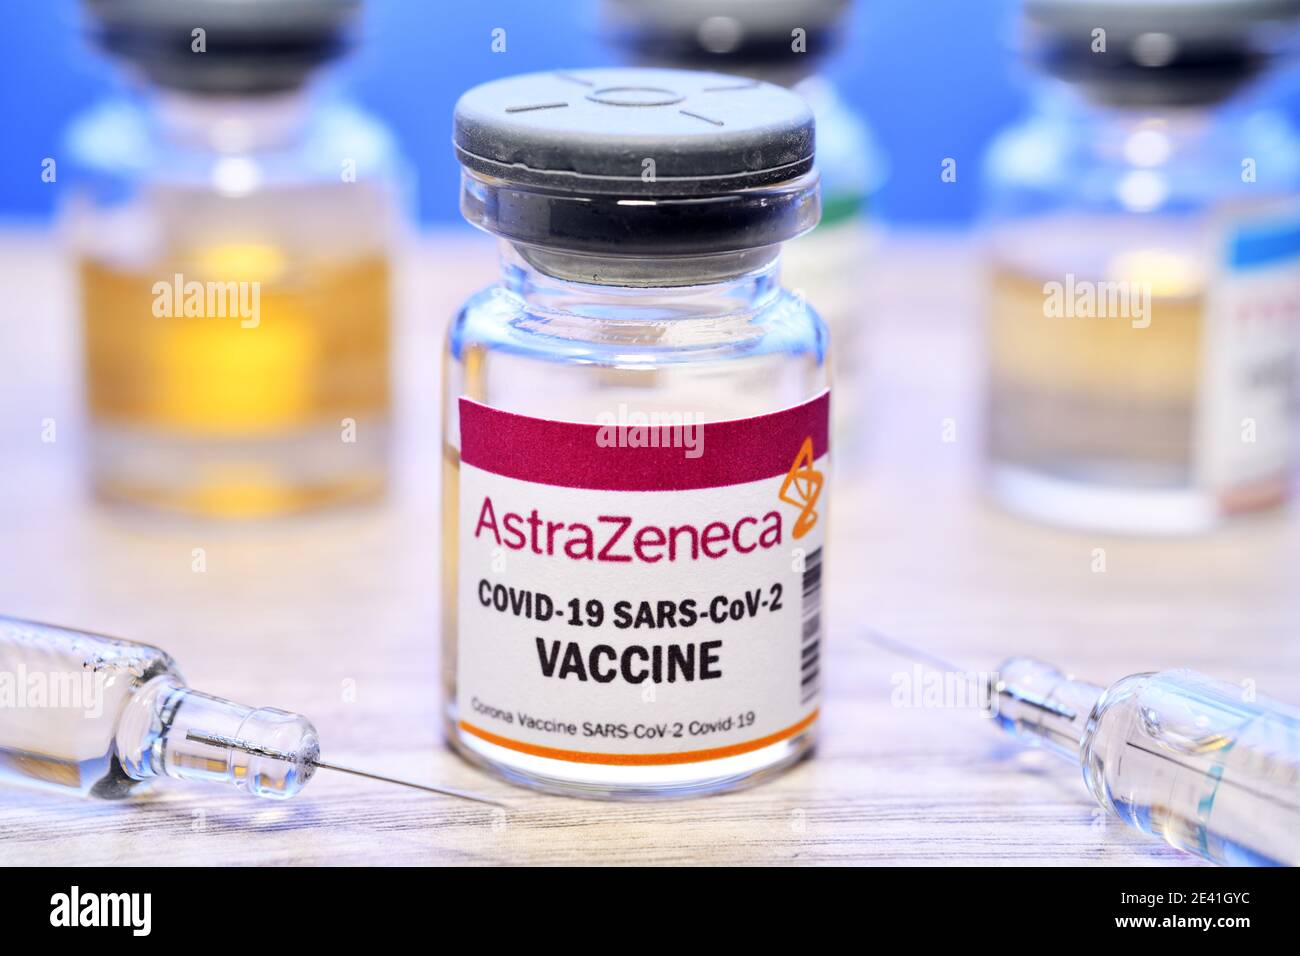 AstraZeneca Covid Vaccine, Symbolic Image Stock Photo